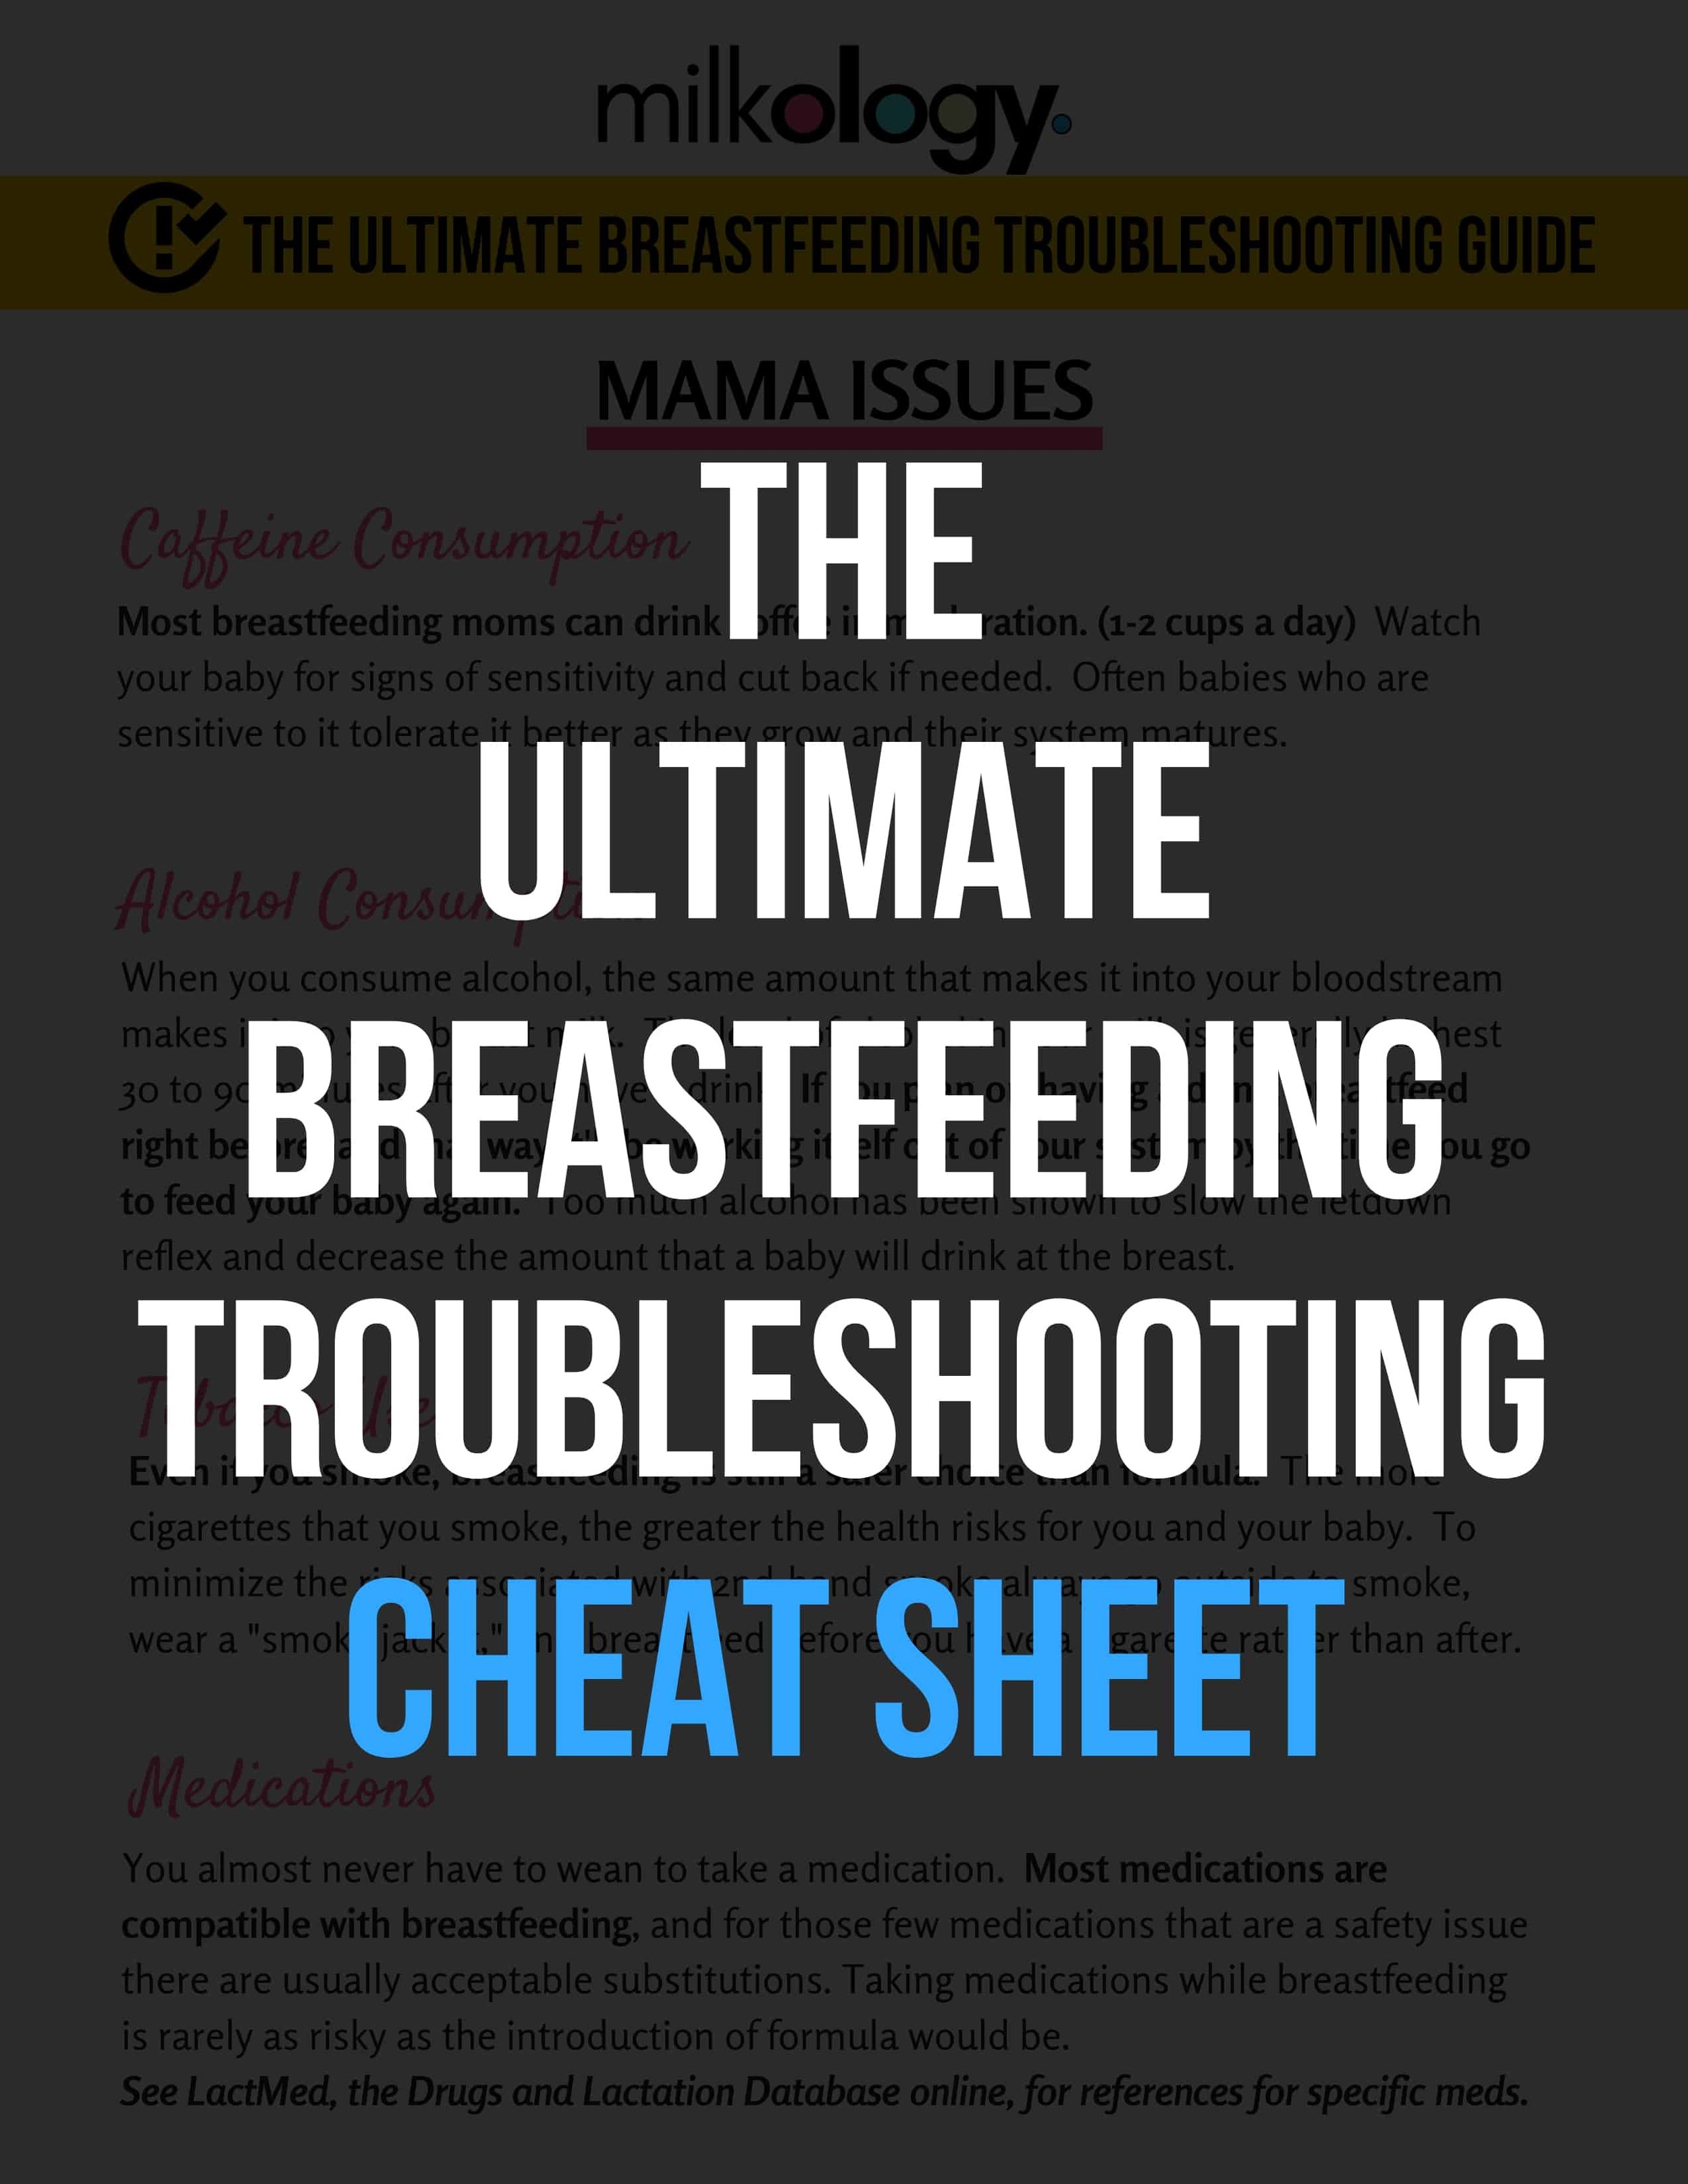 https://images.squarespace-cdn.com/content/v1/59a1c491bebafbe040f31aa2/1567182160068-WL1GBQ7BKNNB1SQX4LEG/free-breastfeeding-checklist.jpg